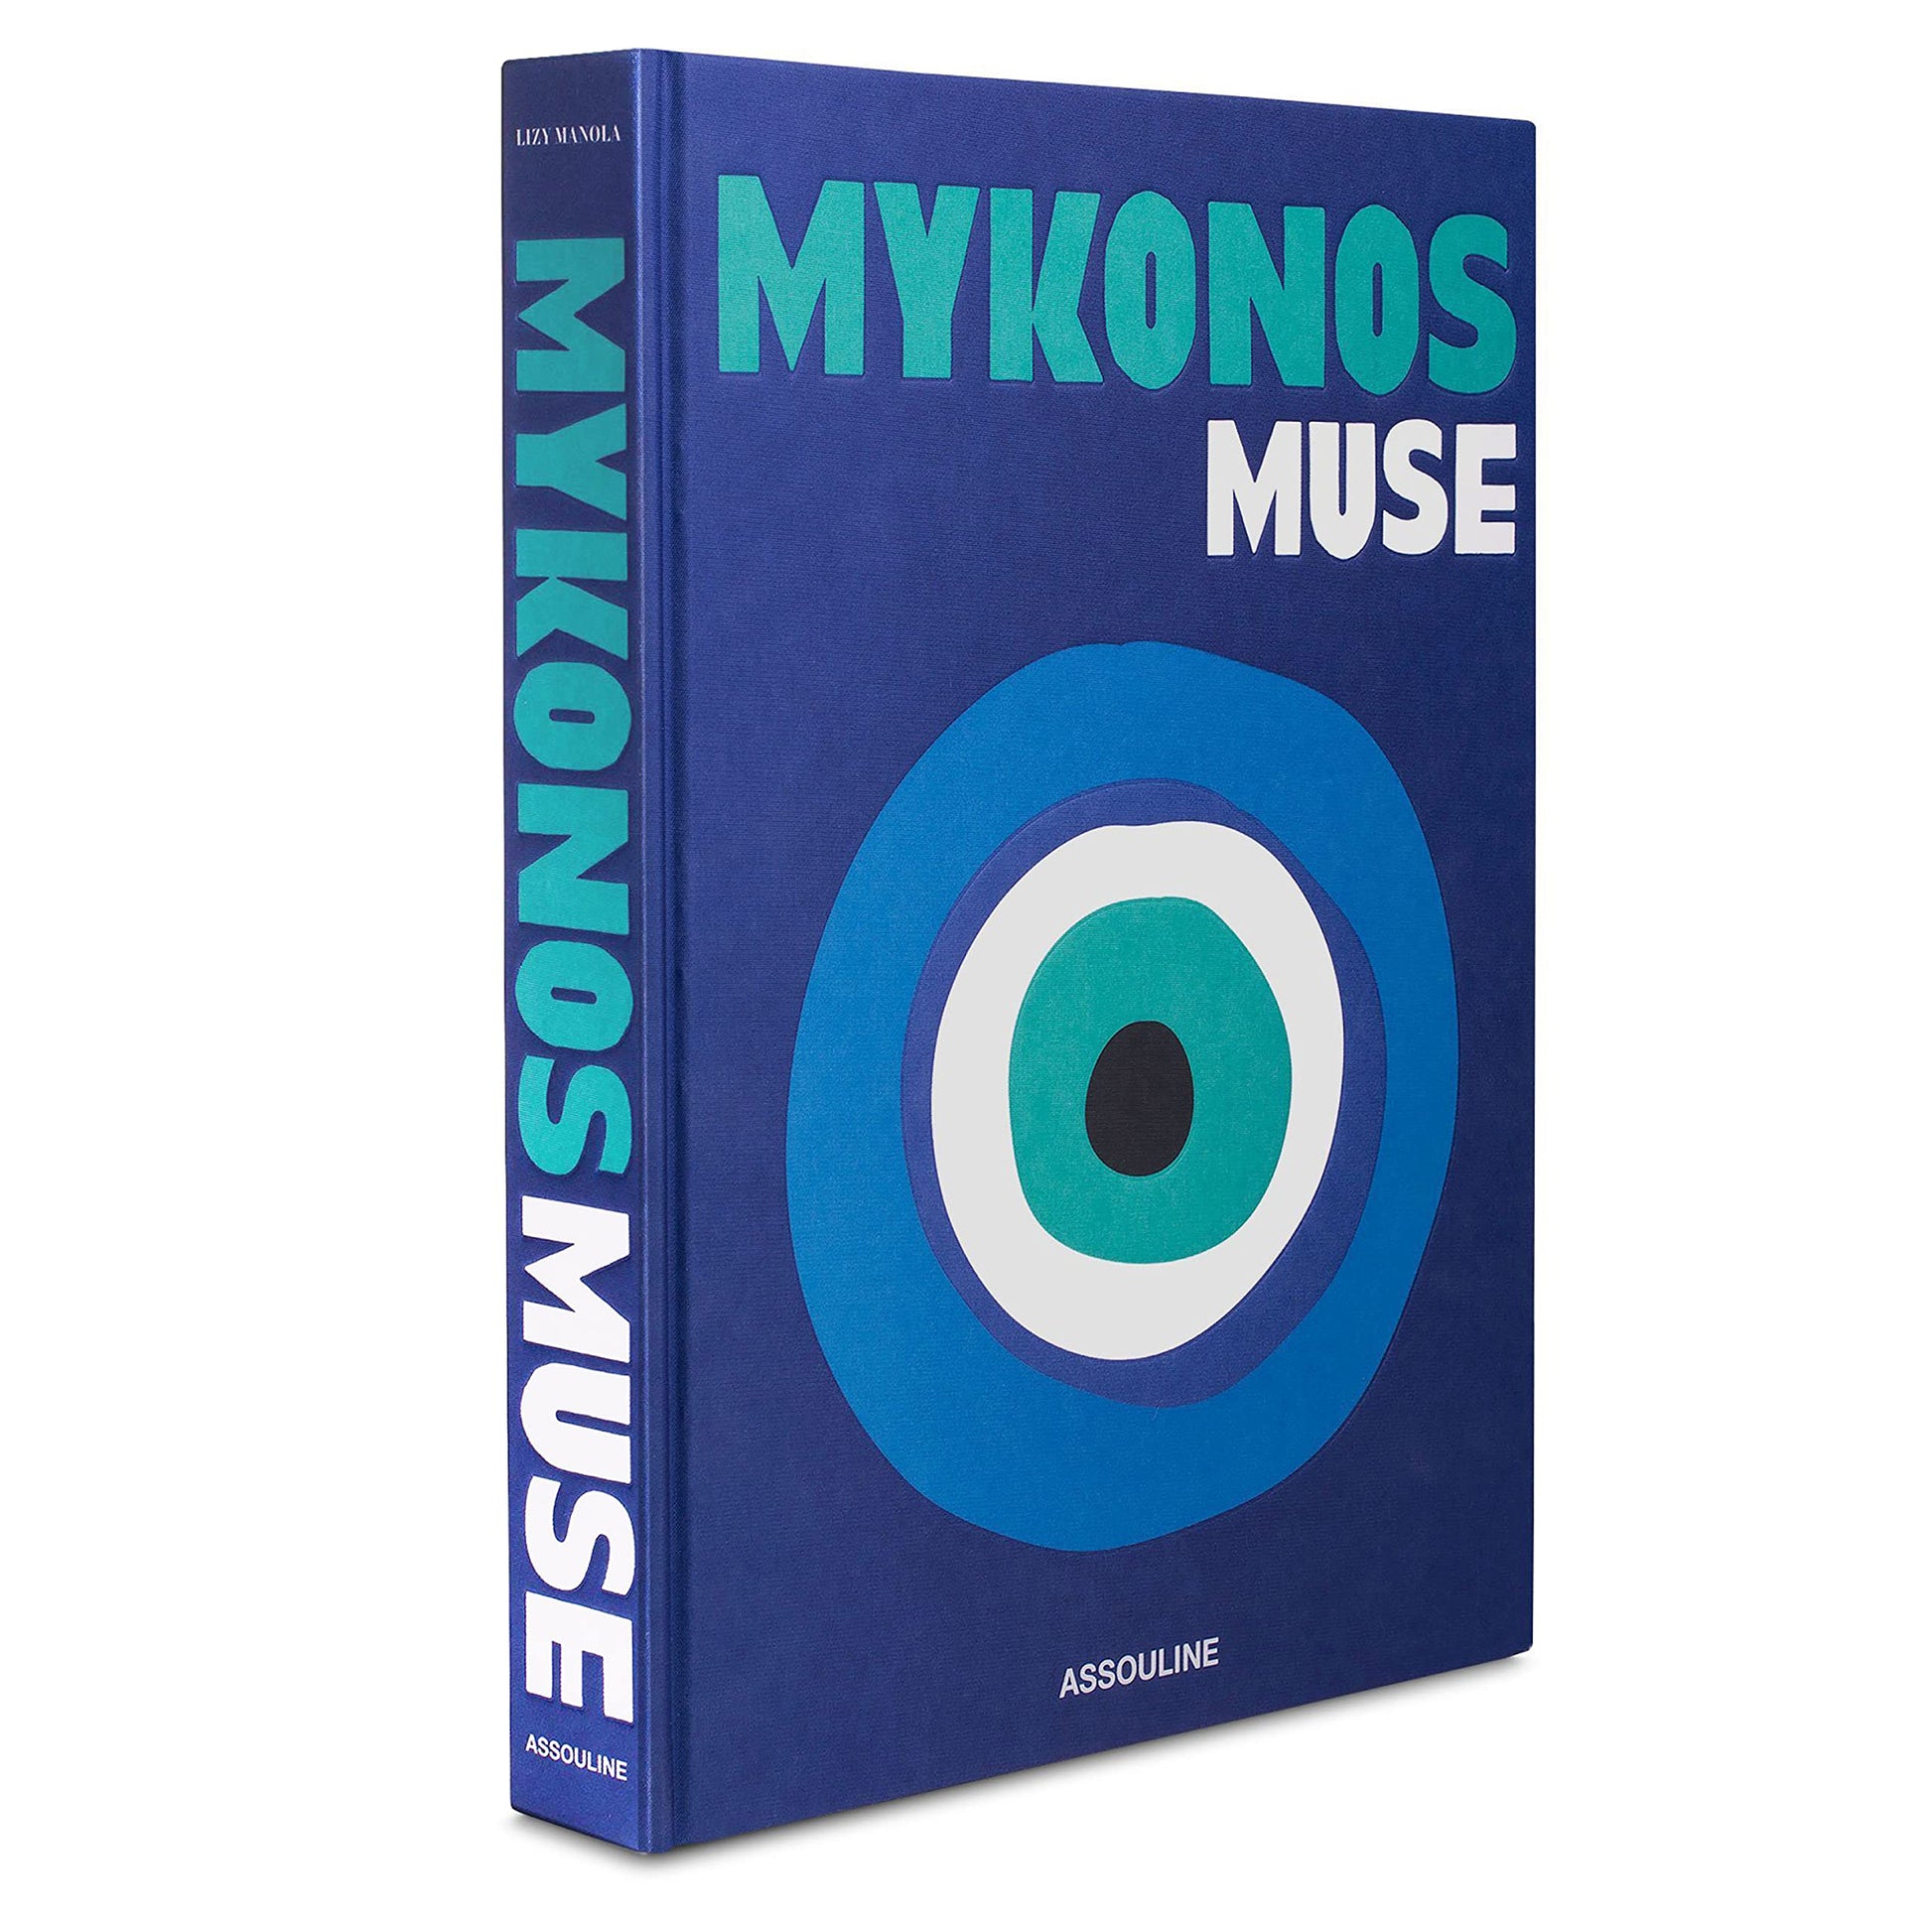 Mykonos | Muse